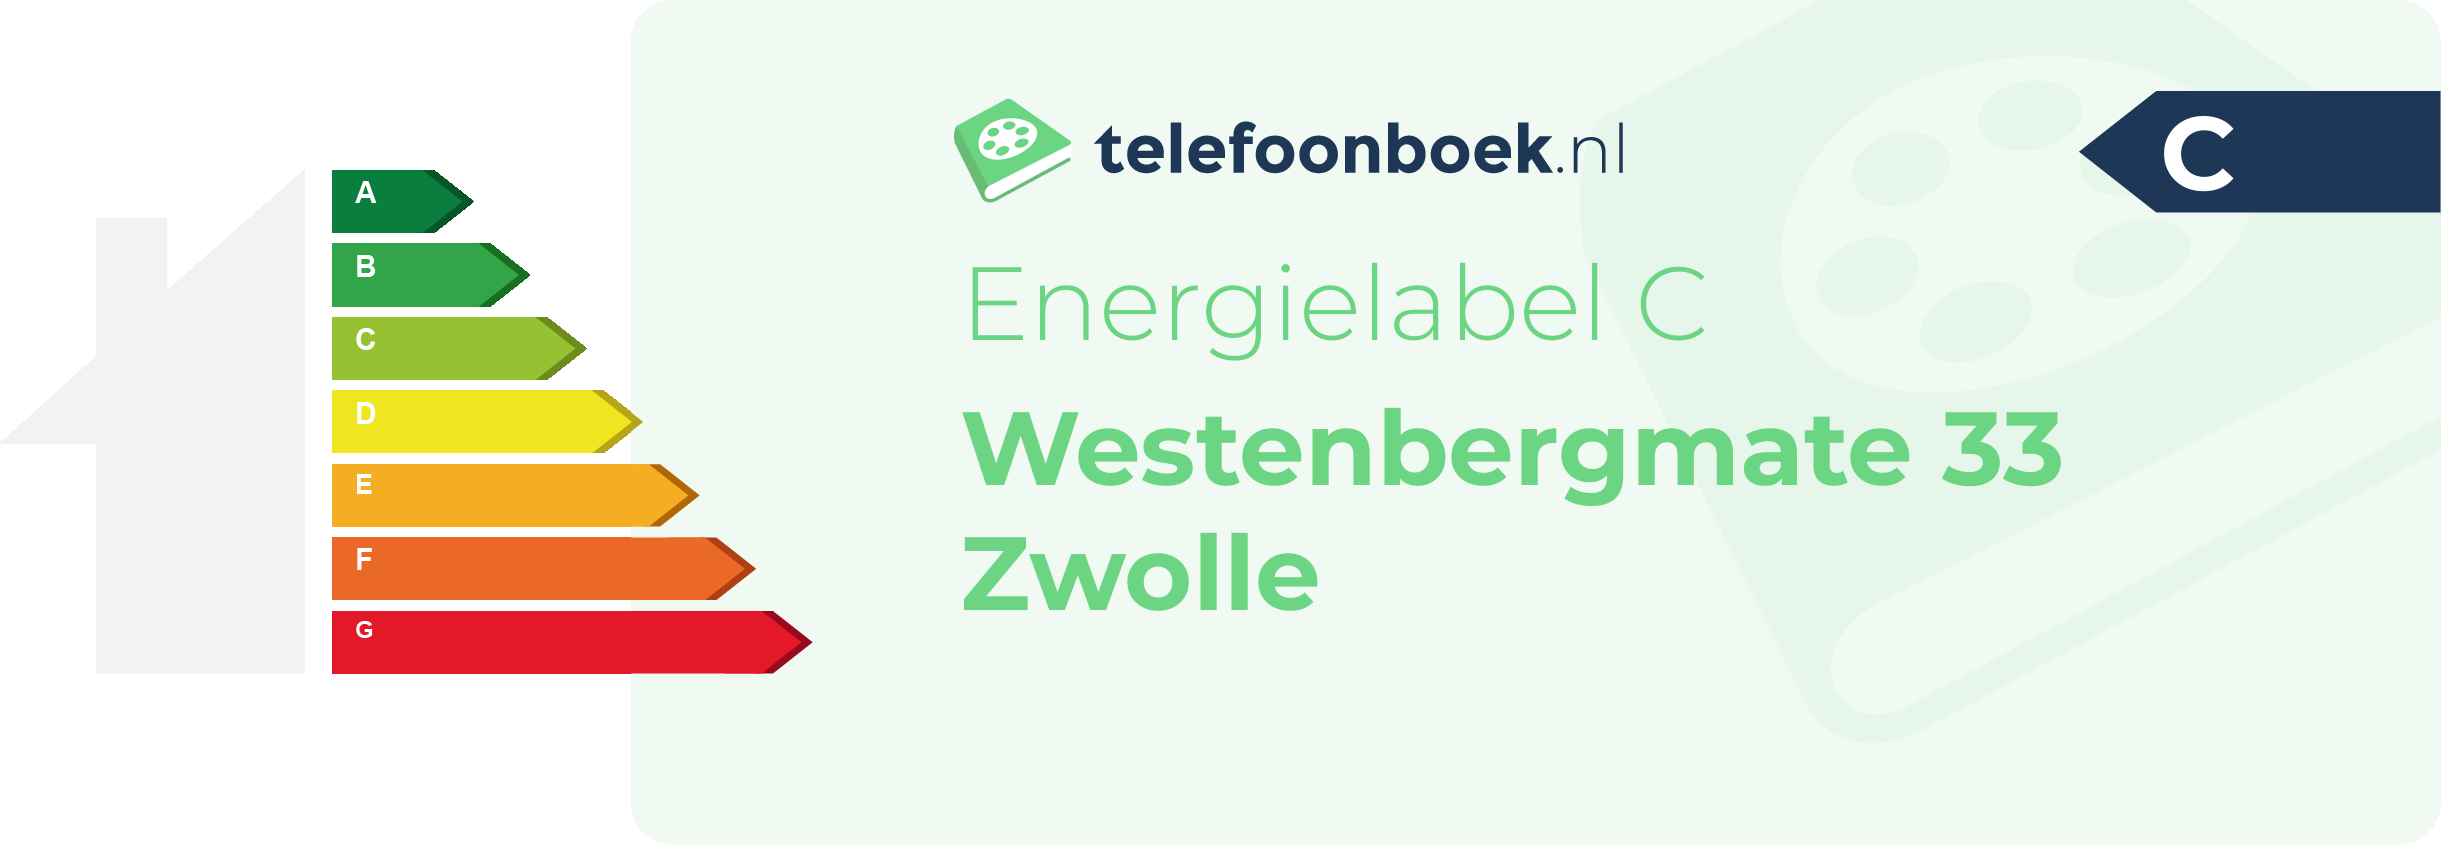 Energielabel Westenbergmate 33 Zwolle